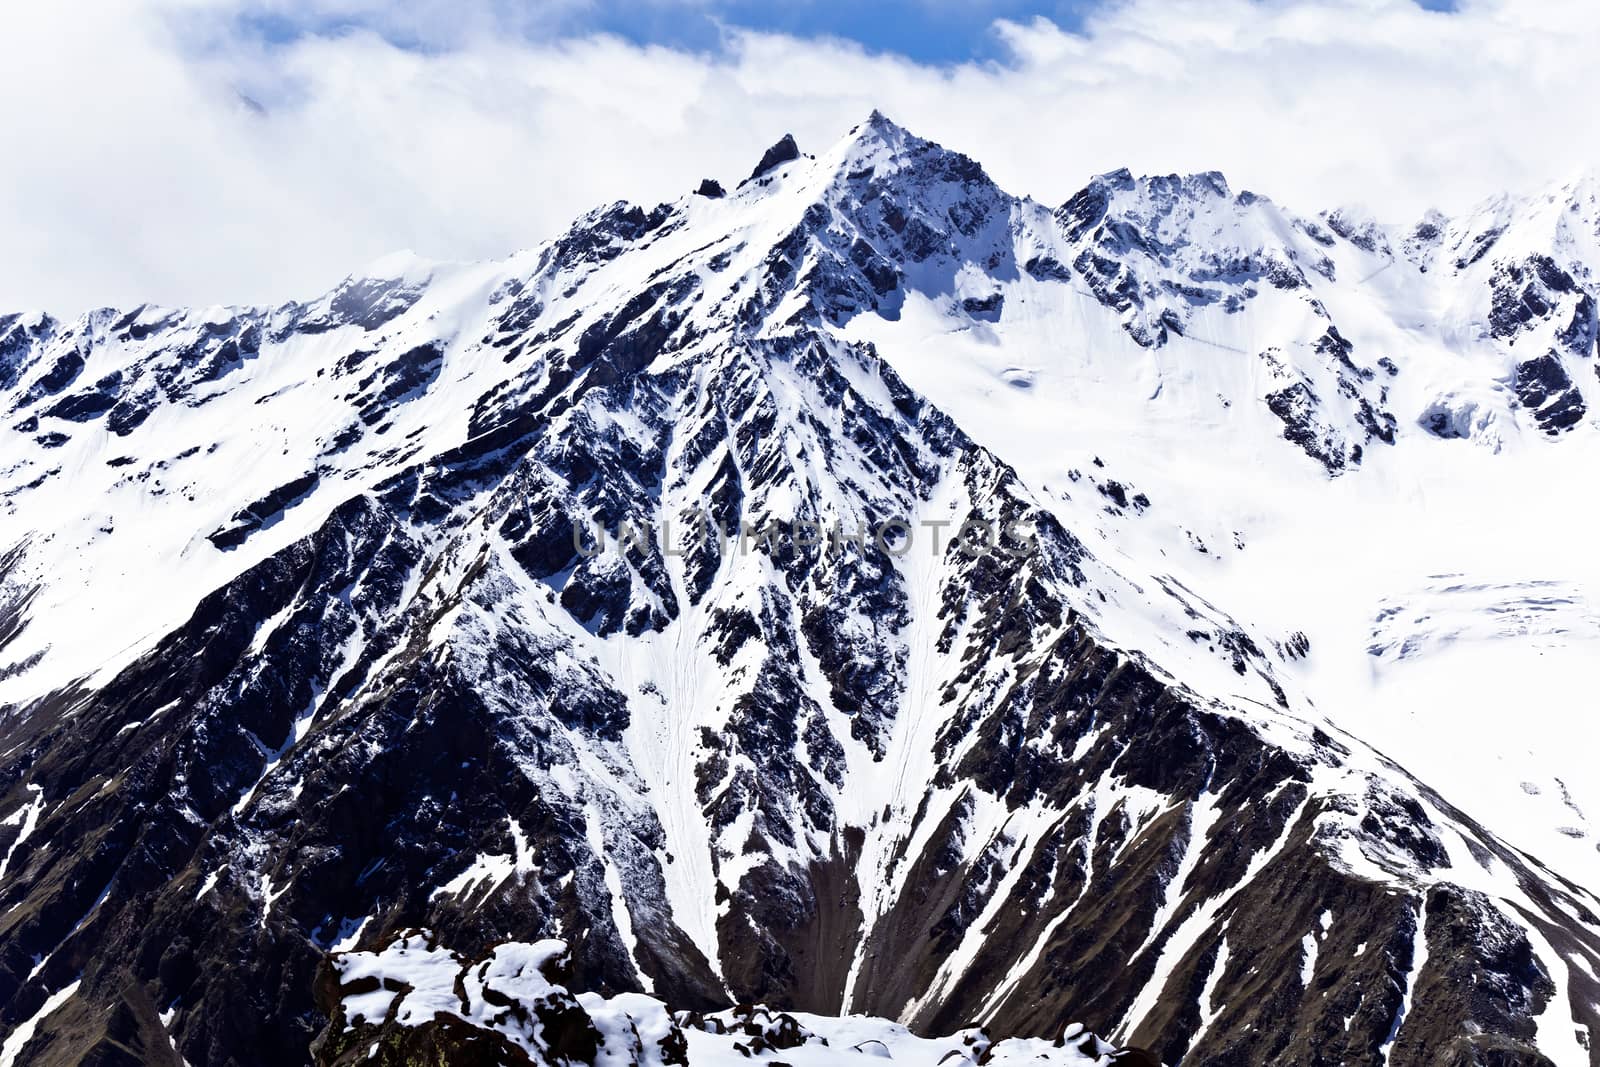 Caucasus mountains under fluffy snow by Julialine